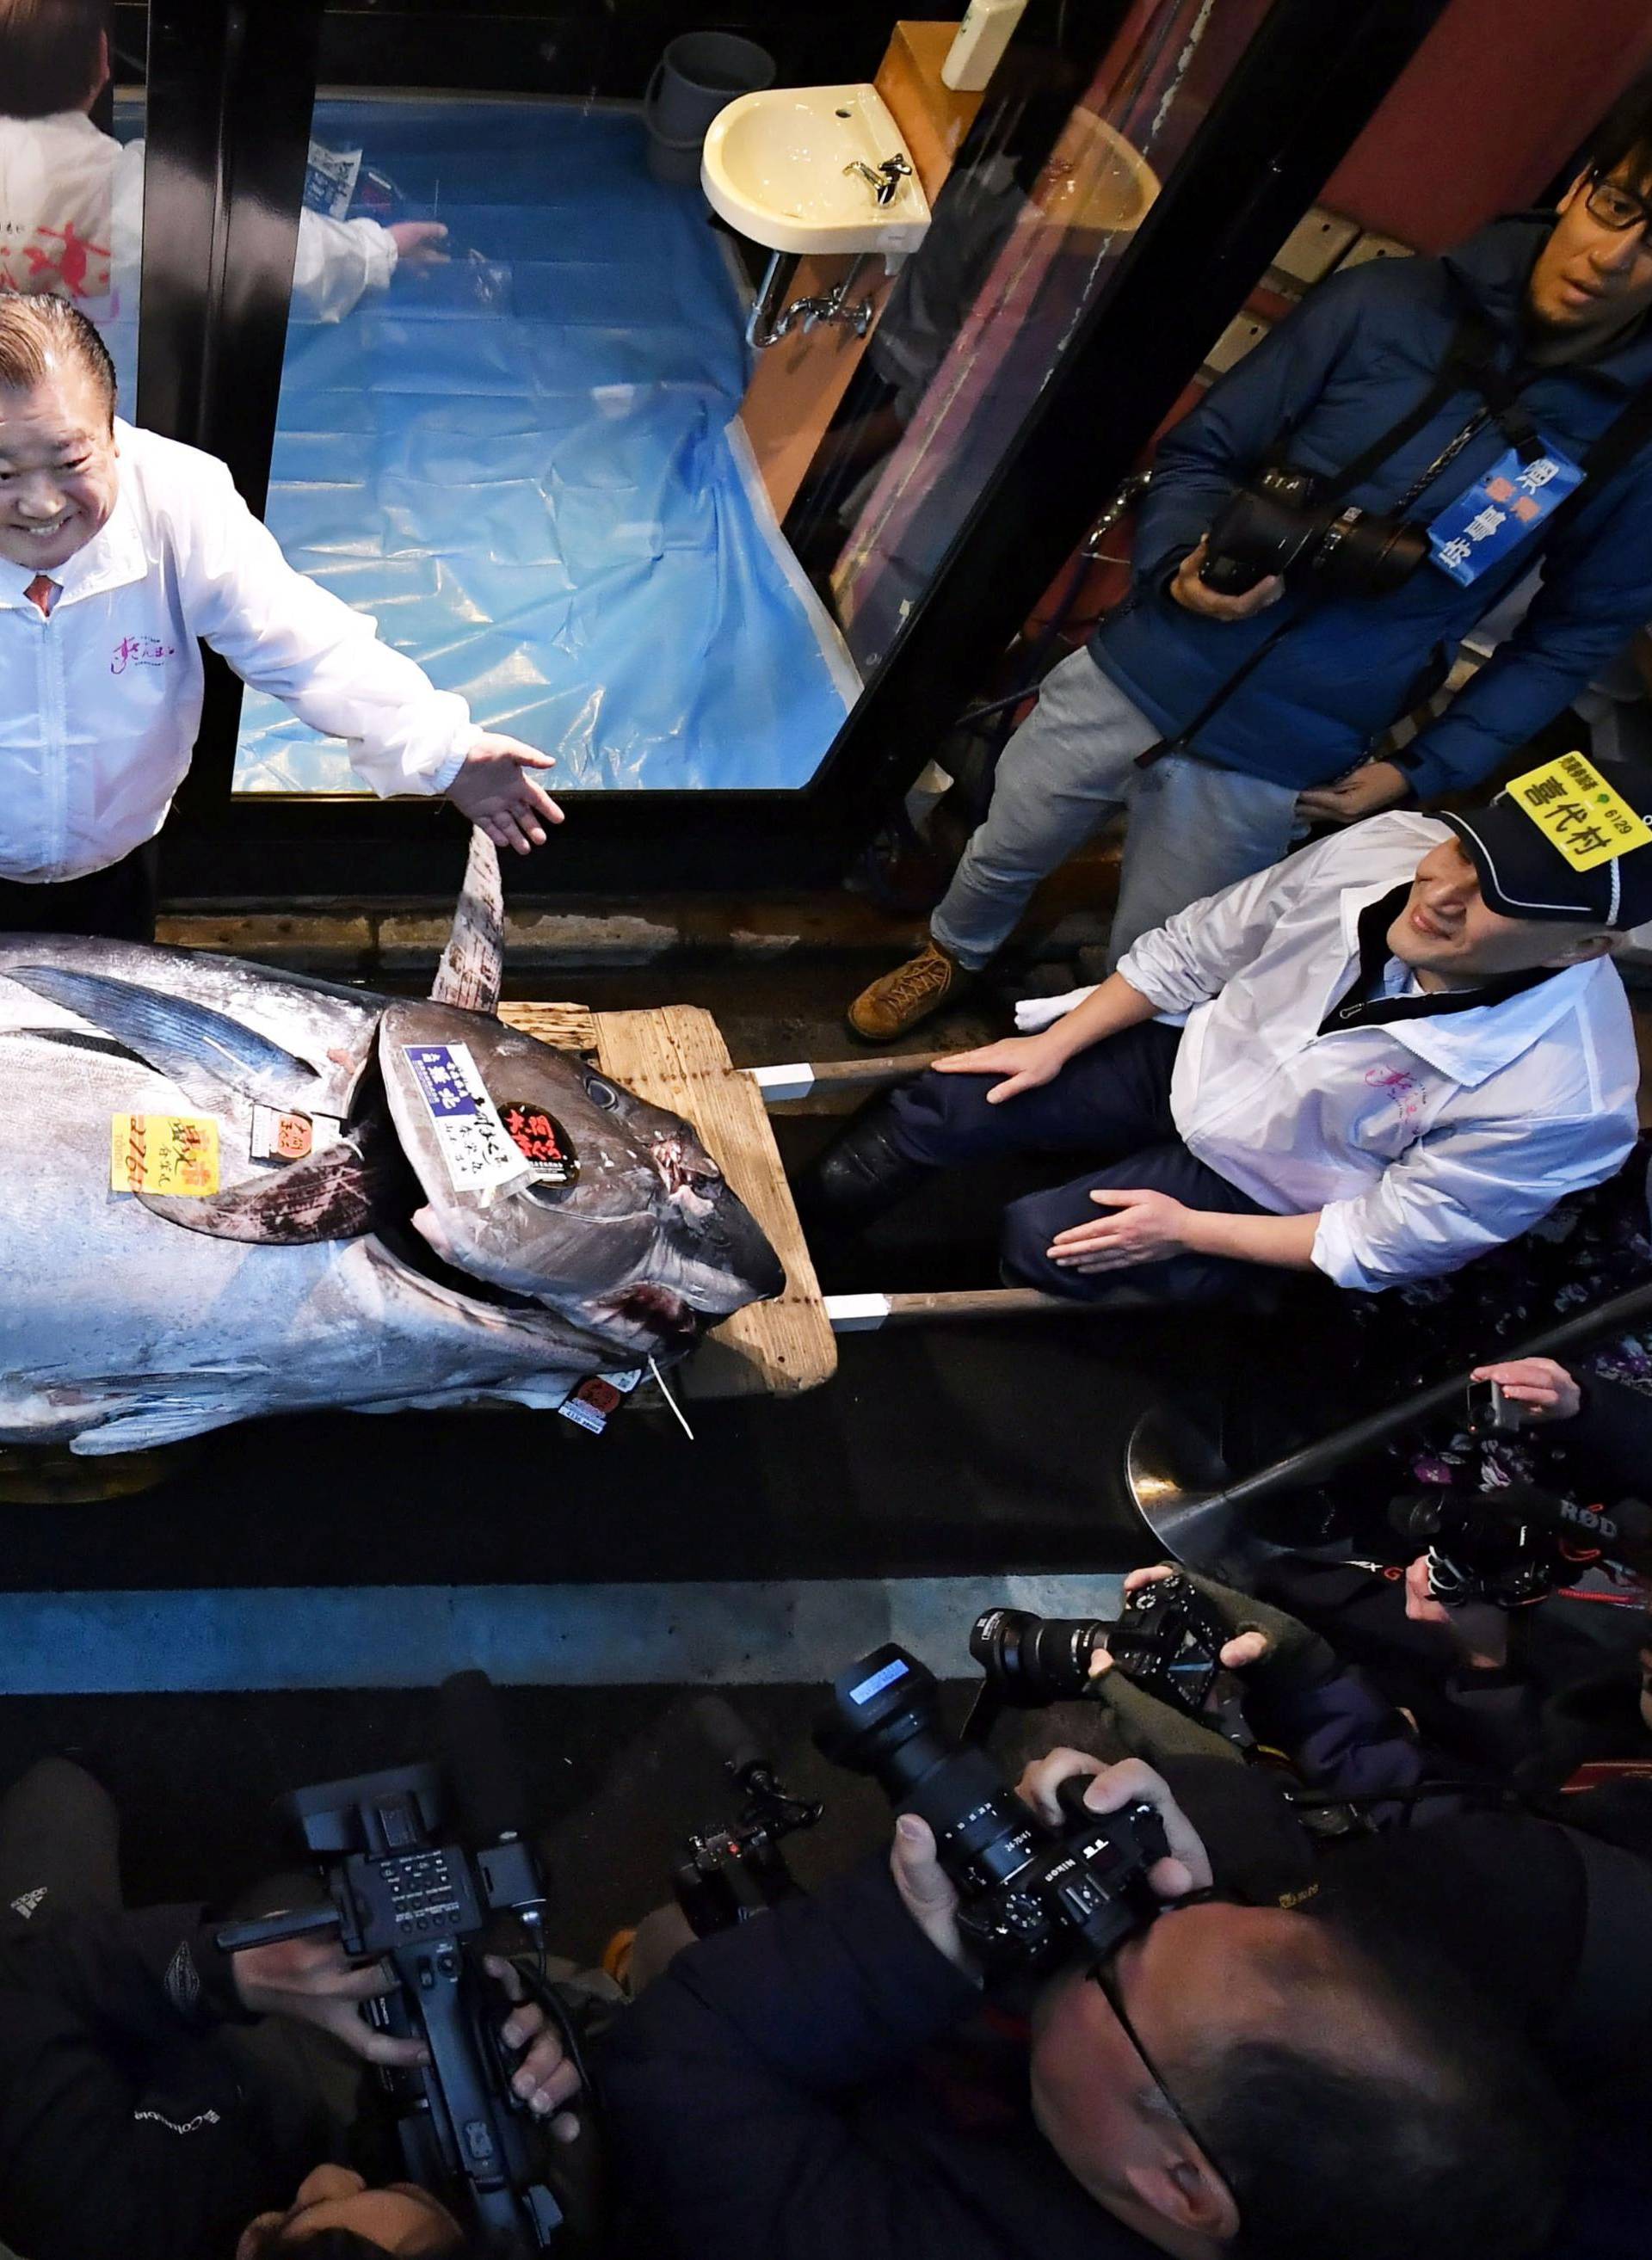 Kiyoshi Kimura, president of Kiyomura Corp., poses with a bluefin tuna in Tokyo